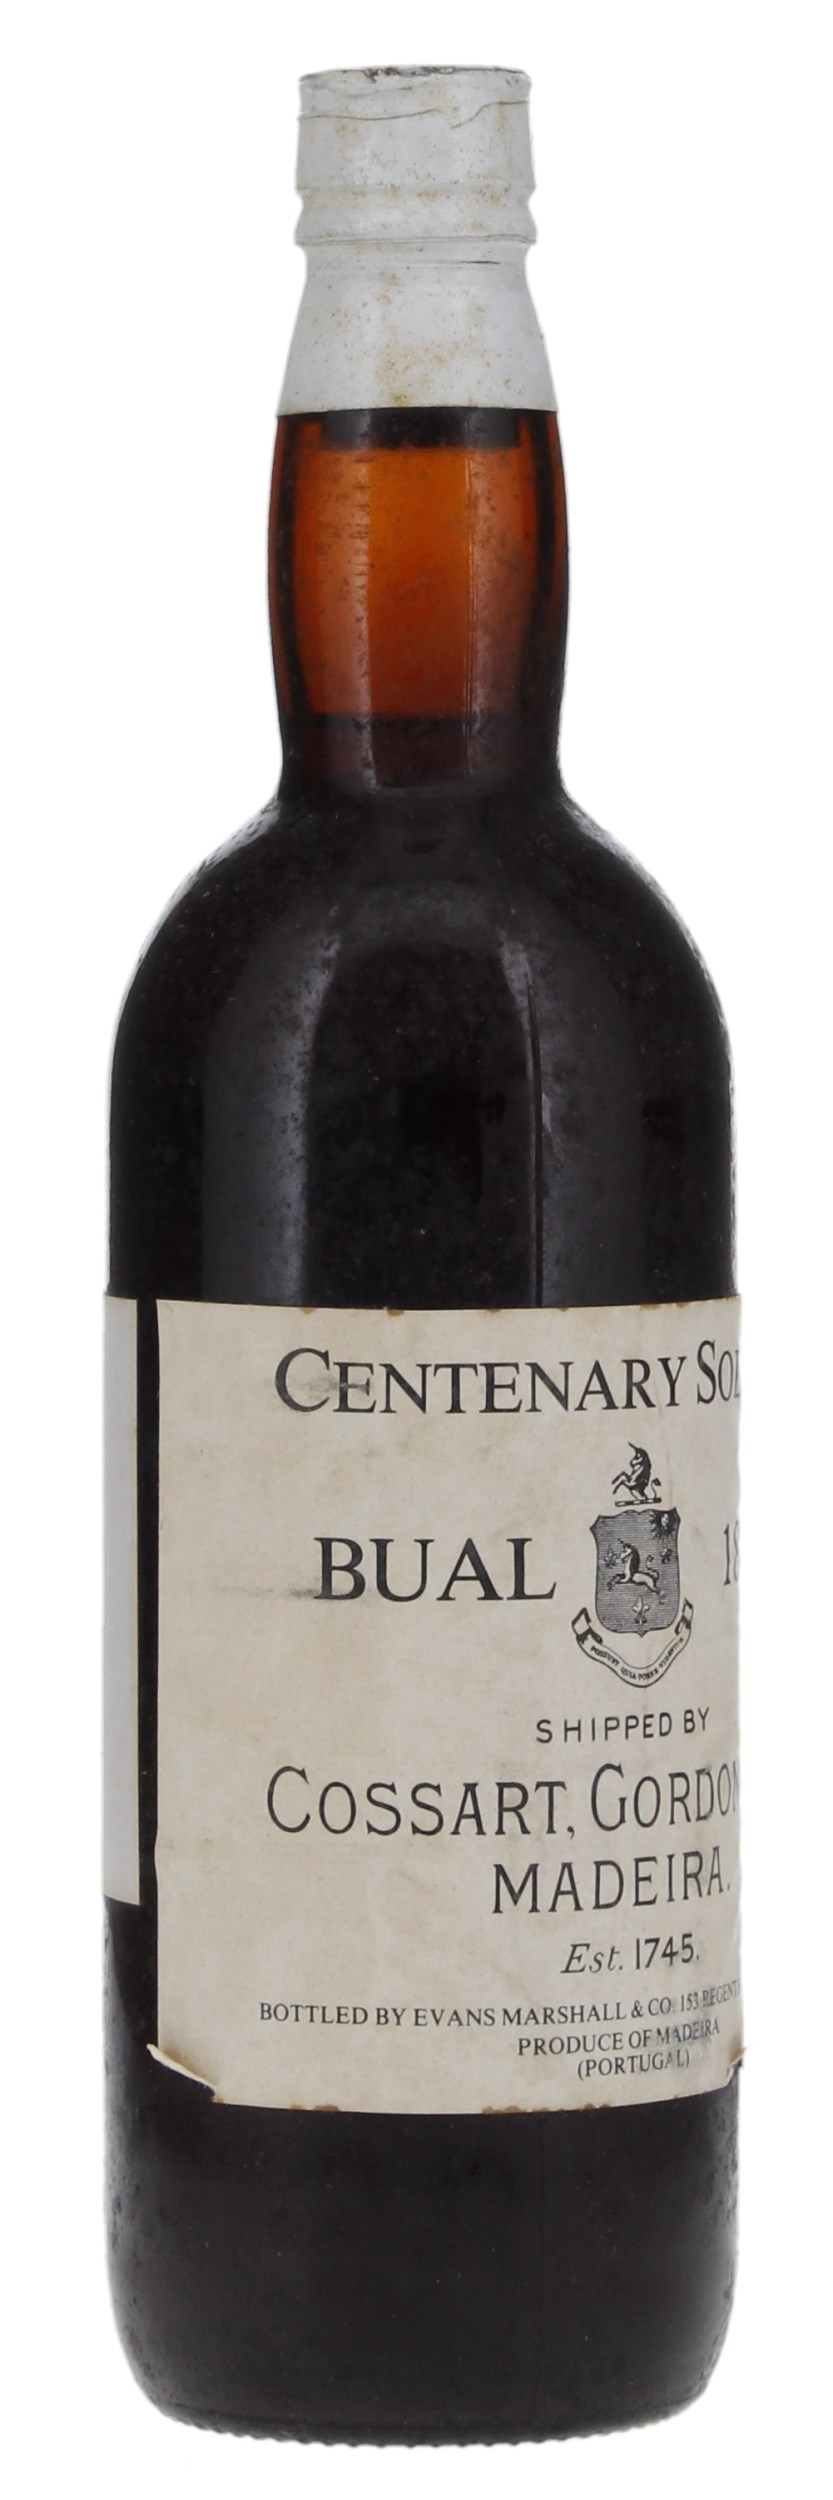 N.V. Cossart Gordon Bual Centenary Solera Madeira 1845, 700ml